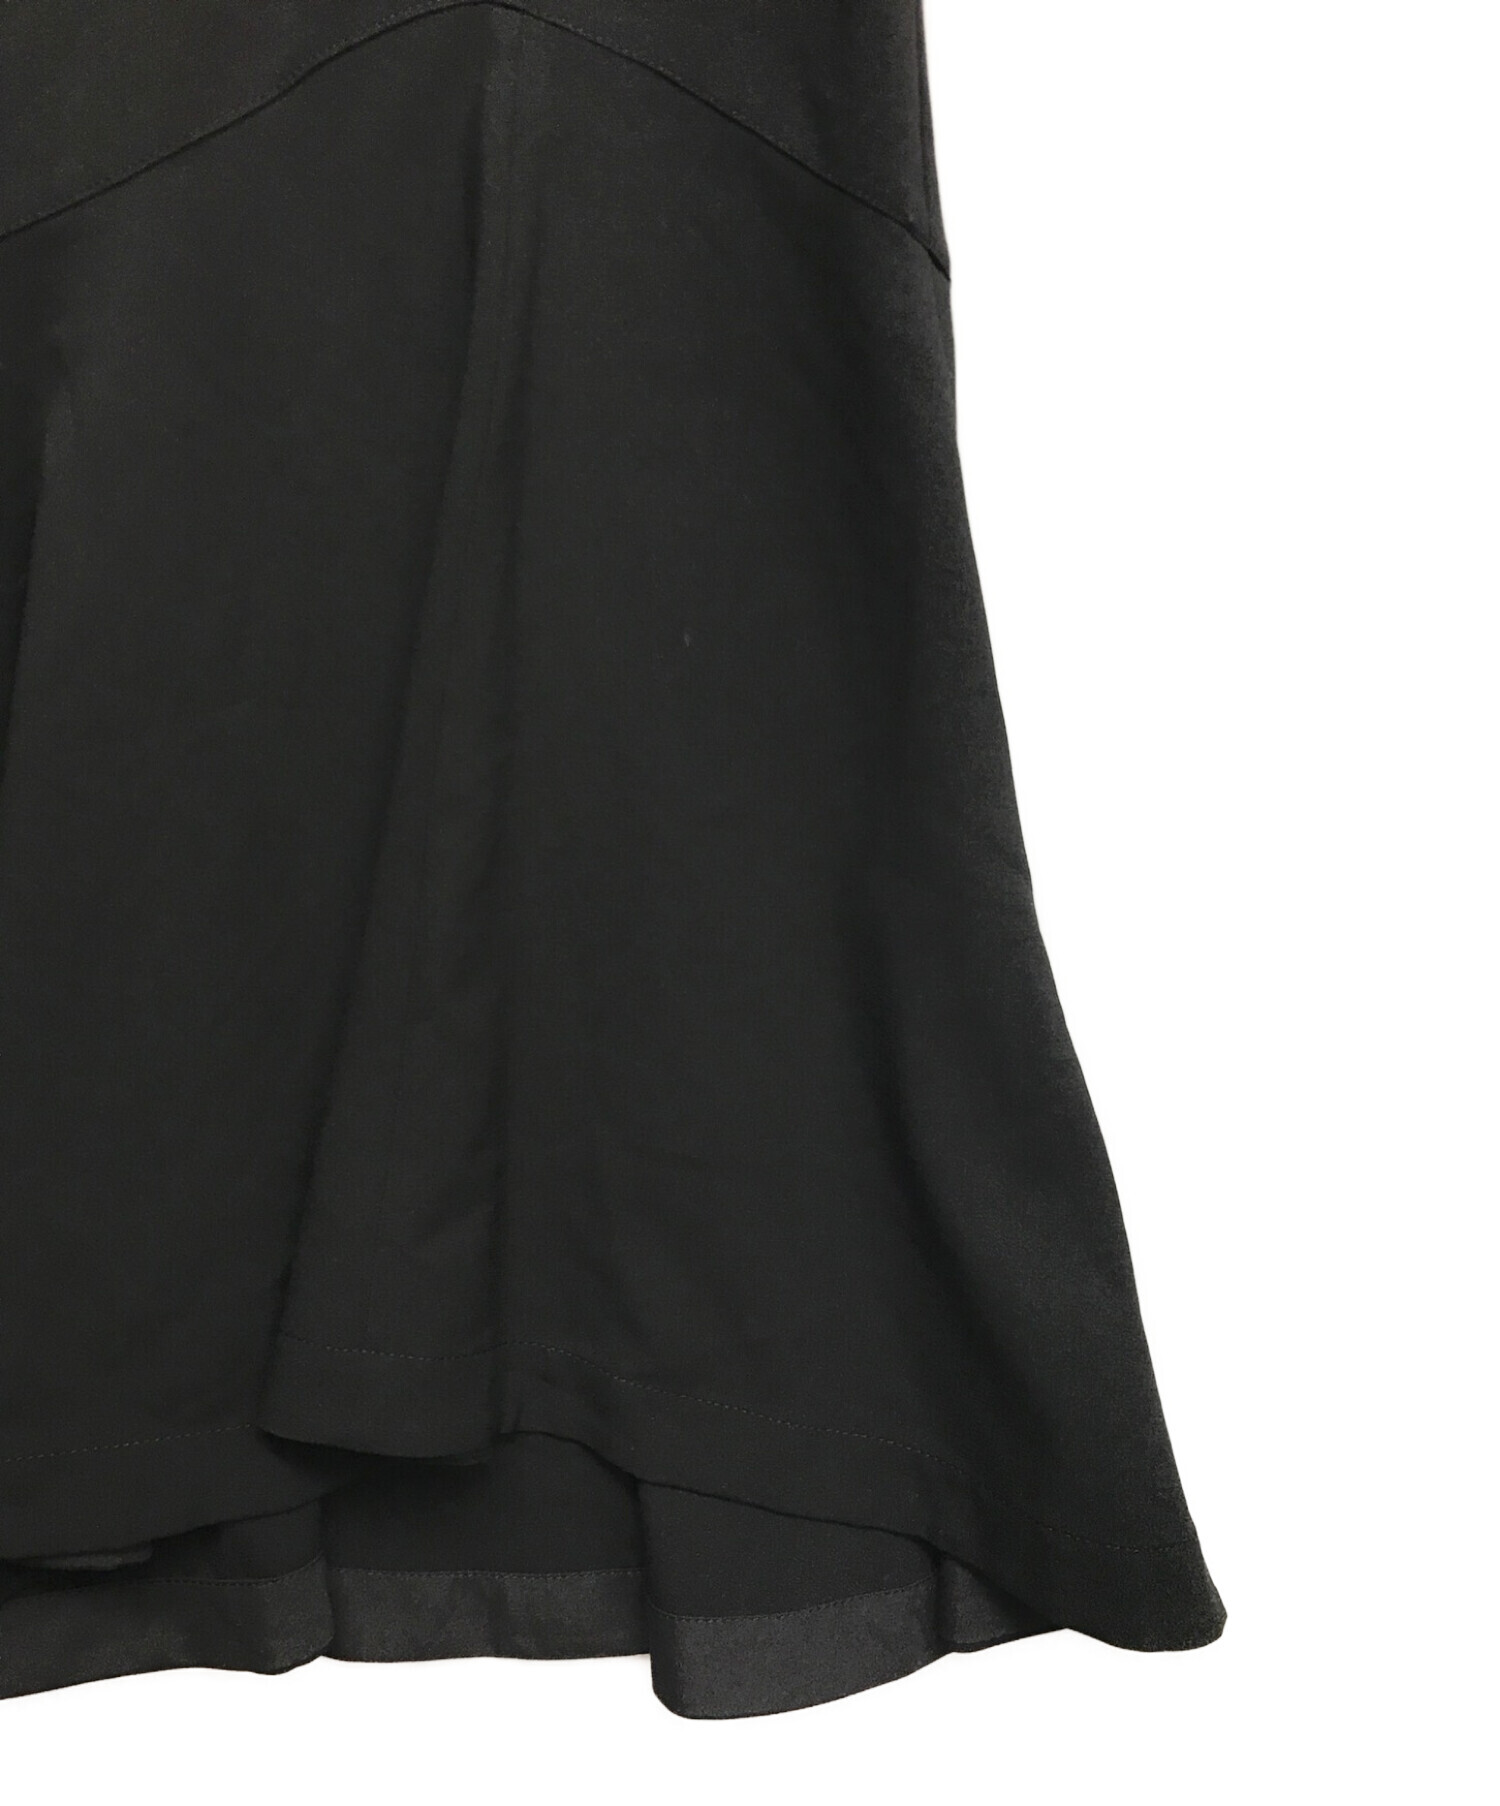 JUSGLITTY (ジャスグリッティー) アシメマーメイドスカート ブラック サイズ:2